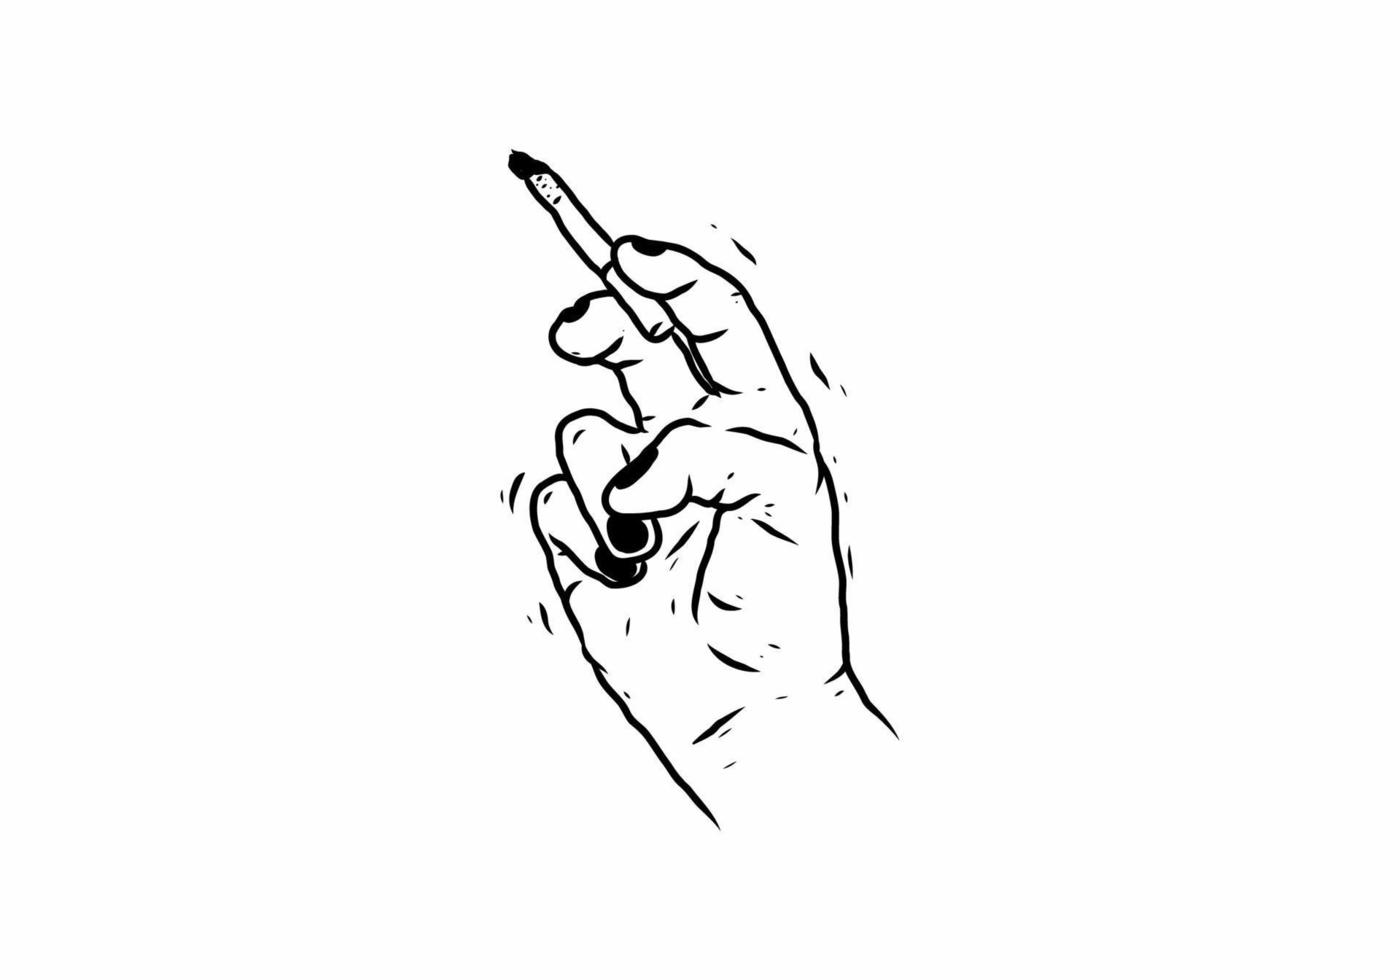 Black illustration drawing of hand holding cigarette vector